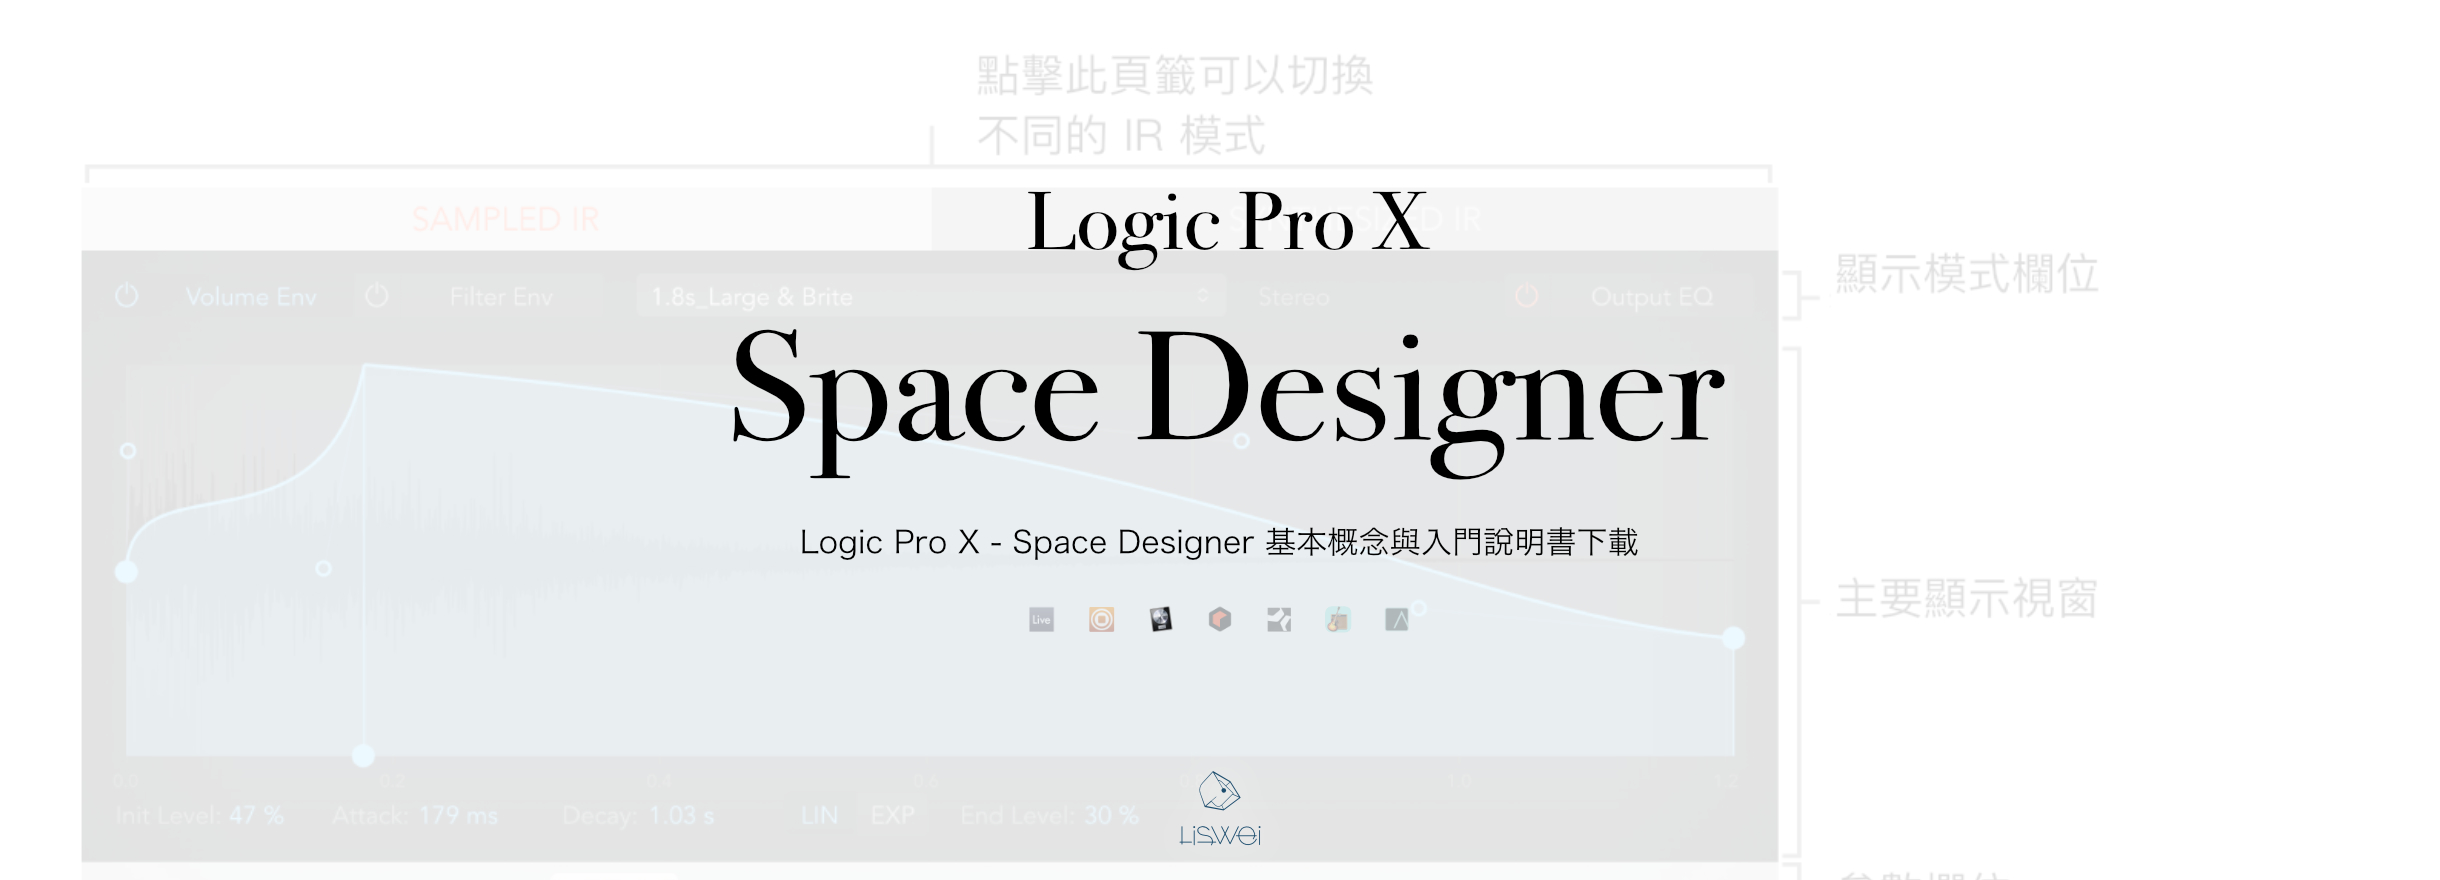 Logic Pro X Space Designer 基本概念與入門介紹